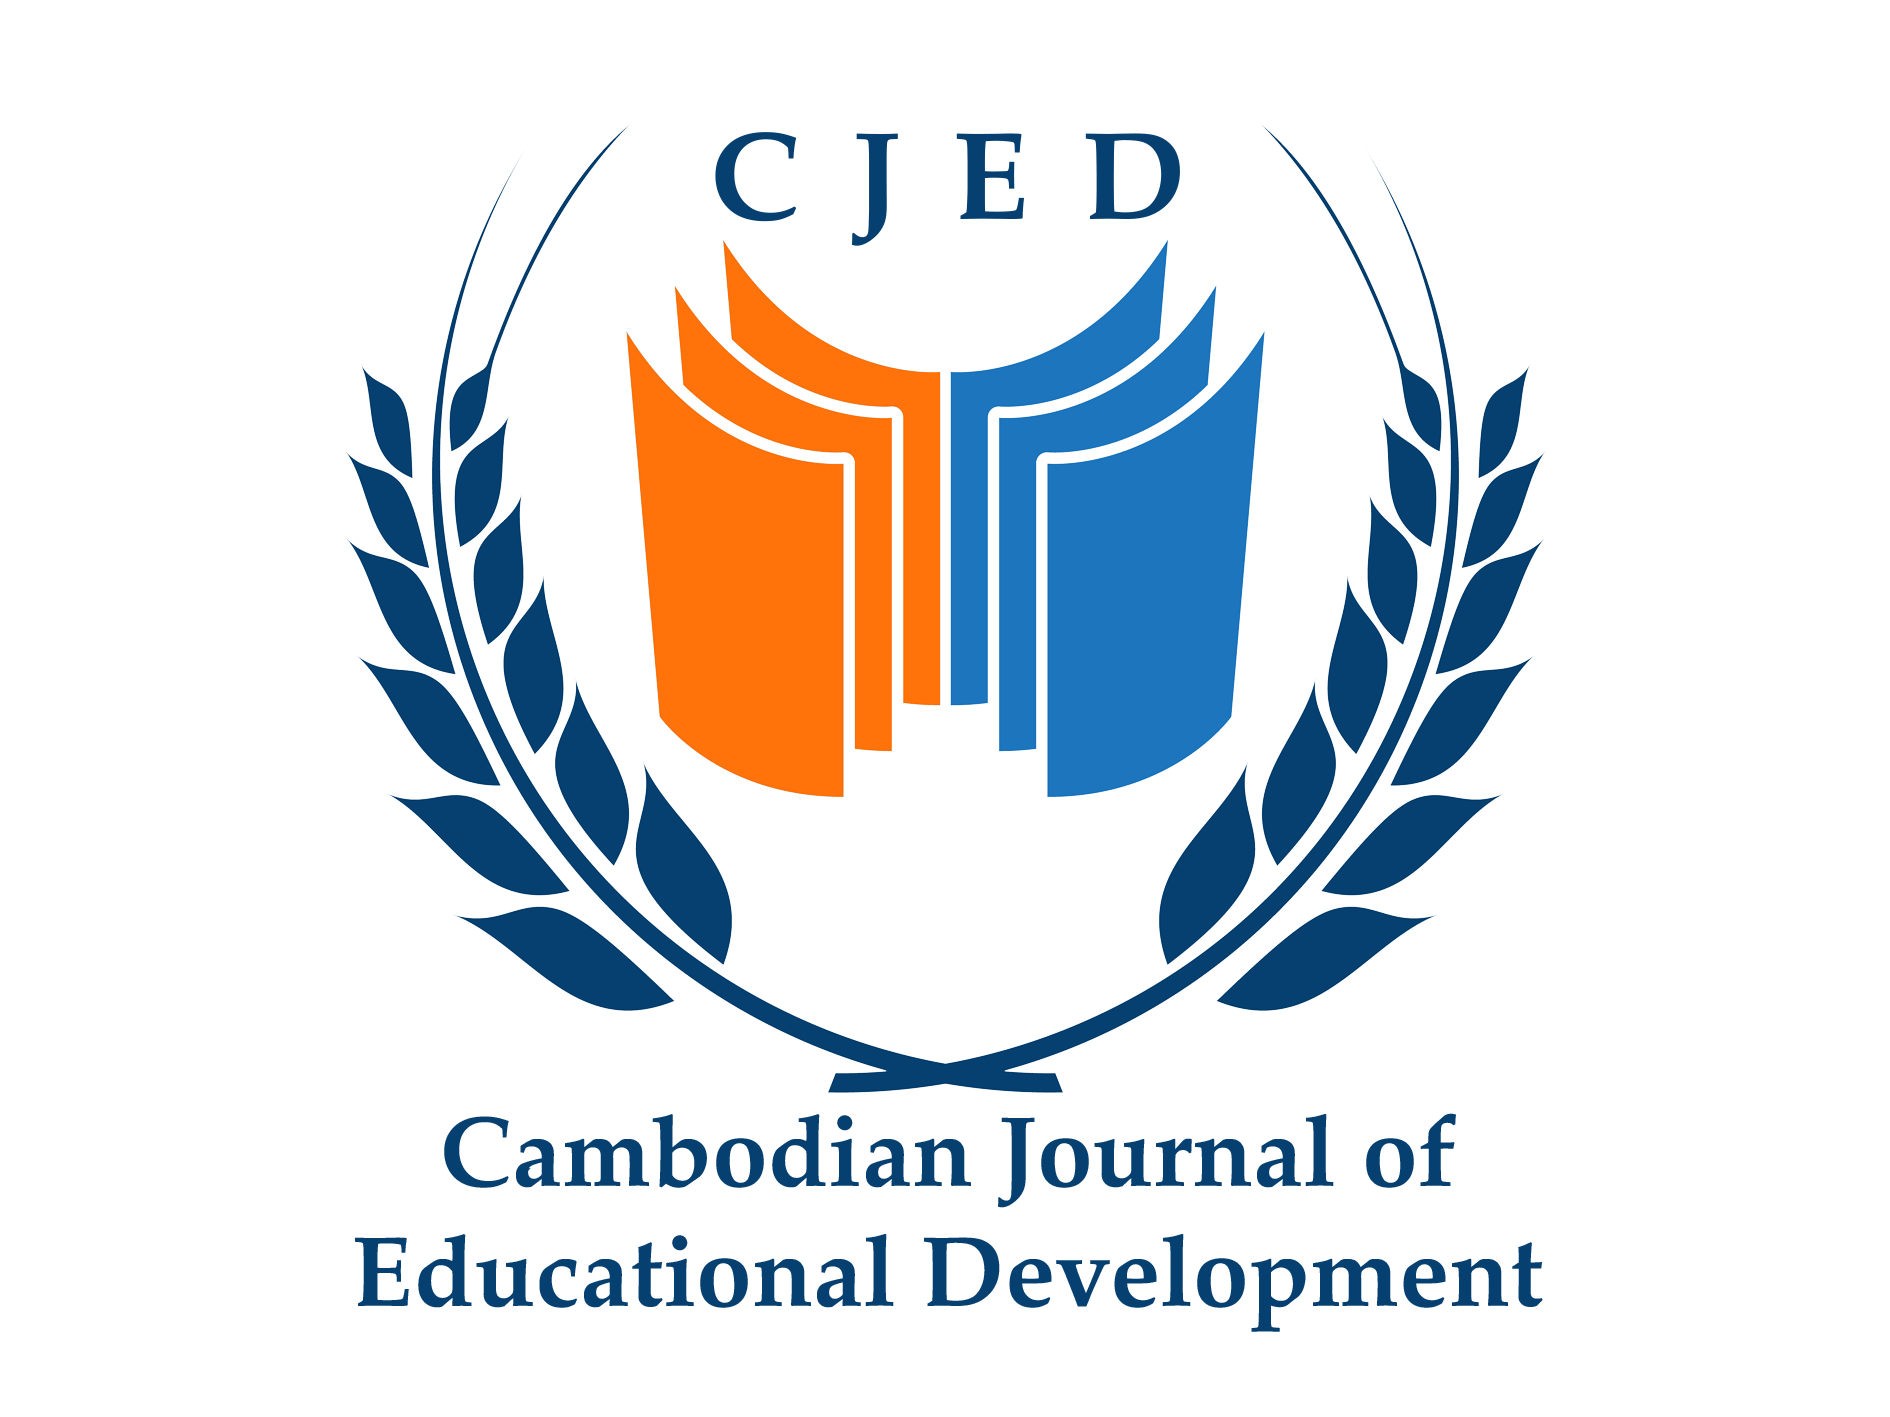 Cambodian Journal of Educational Development